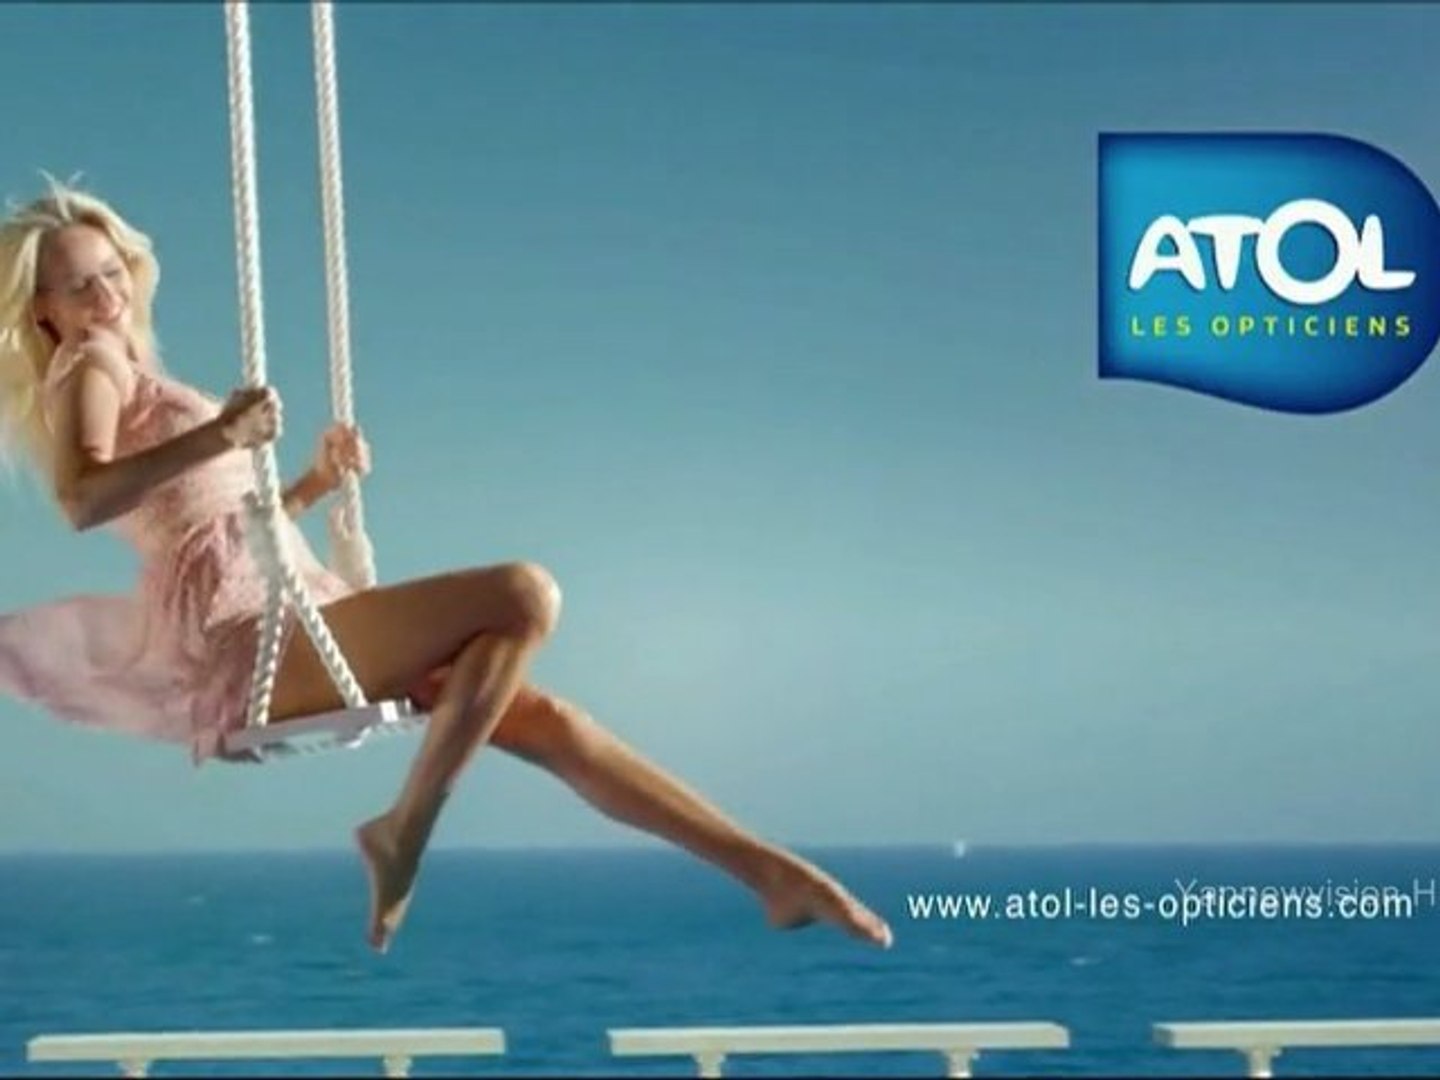 Publicité HD - "ATOL Les Opticiens" (avec Adriana Karembeu) 2011 - Vidéo  Dailymotion